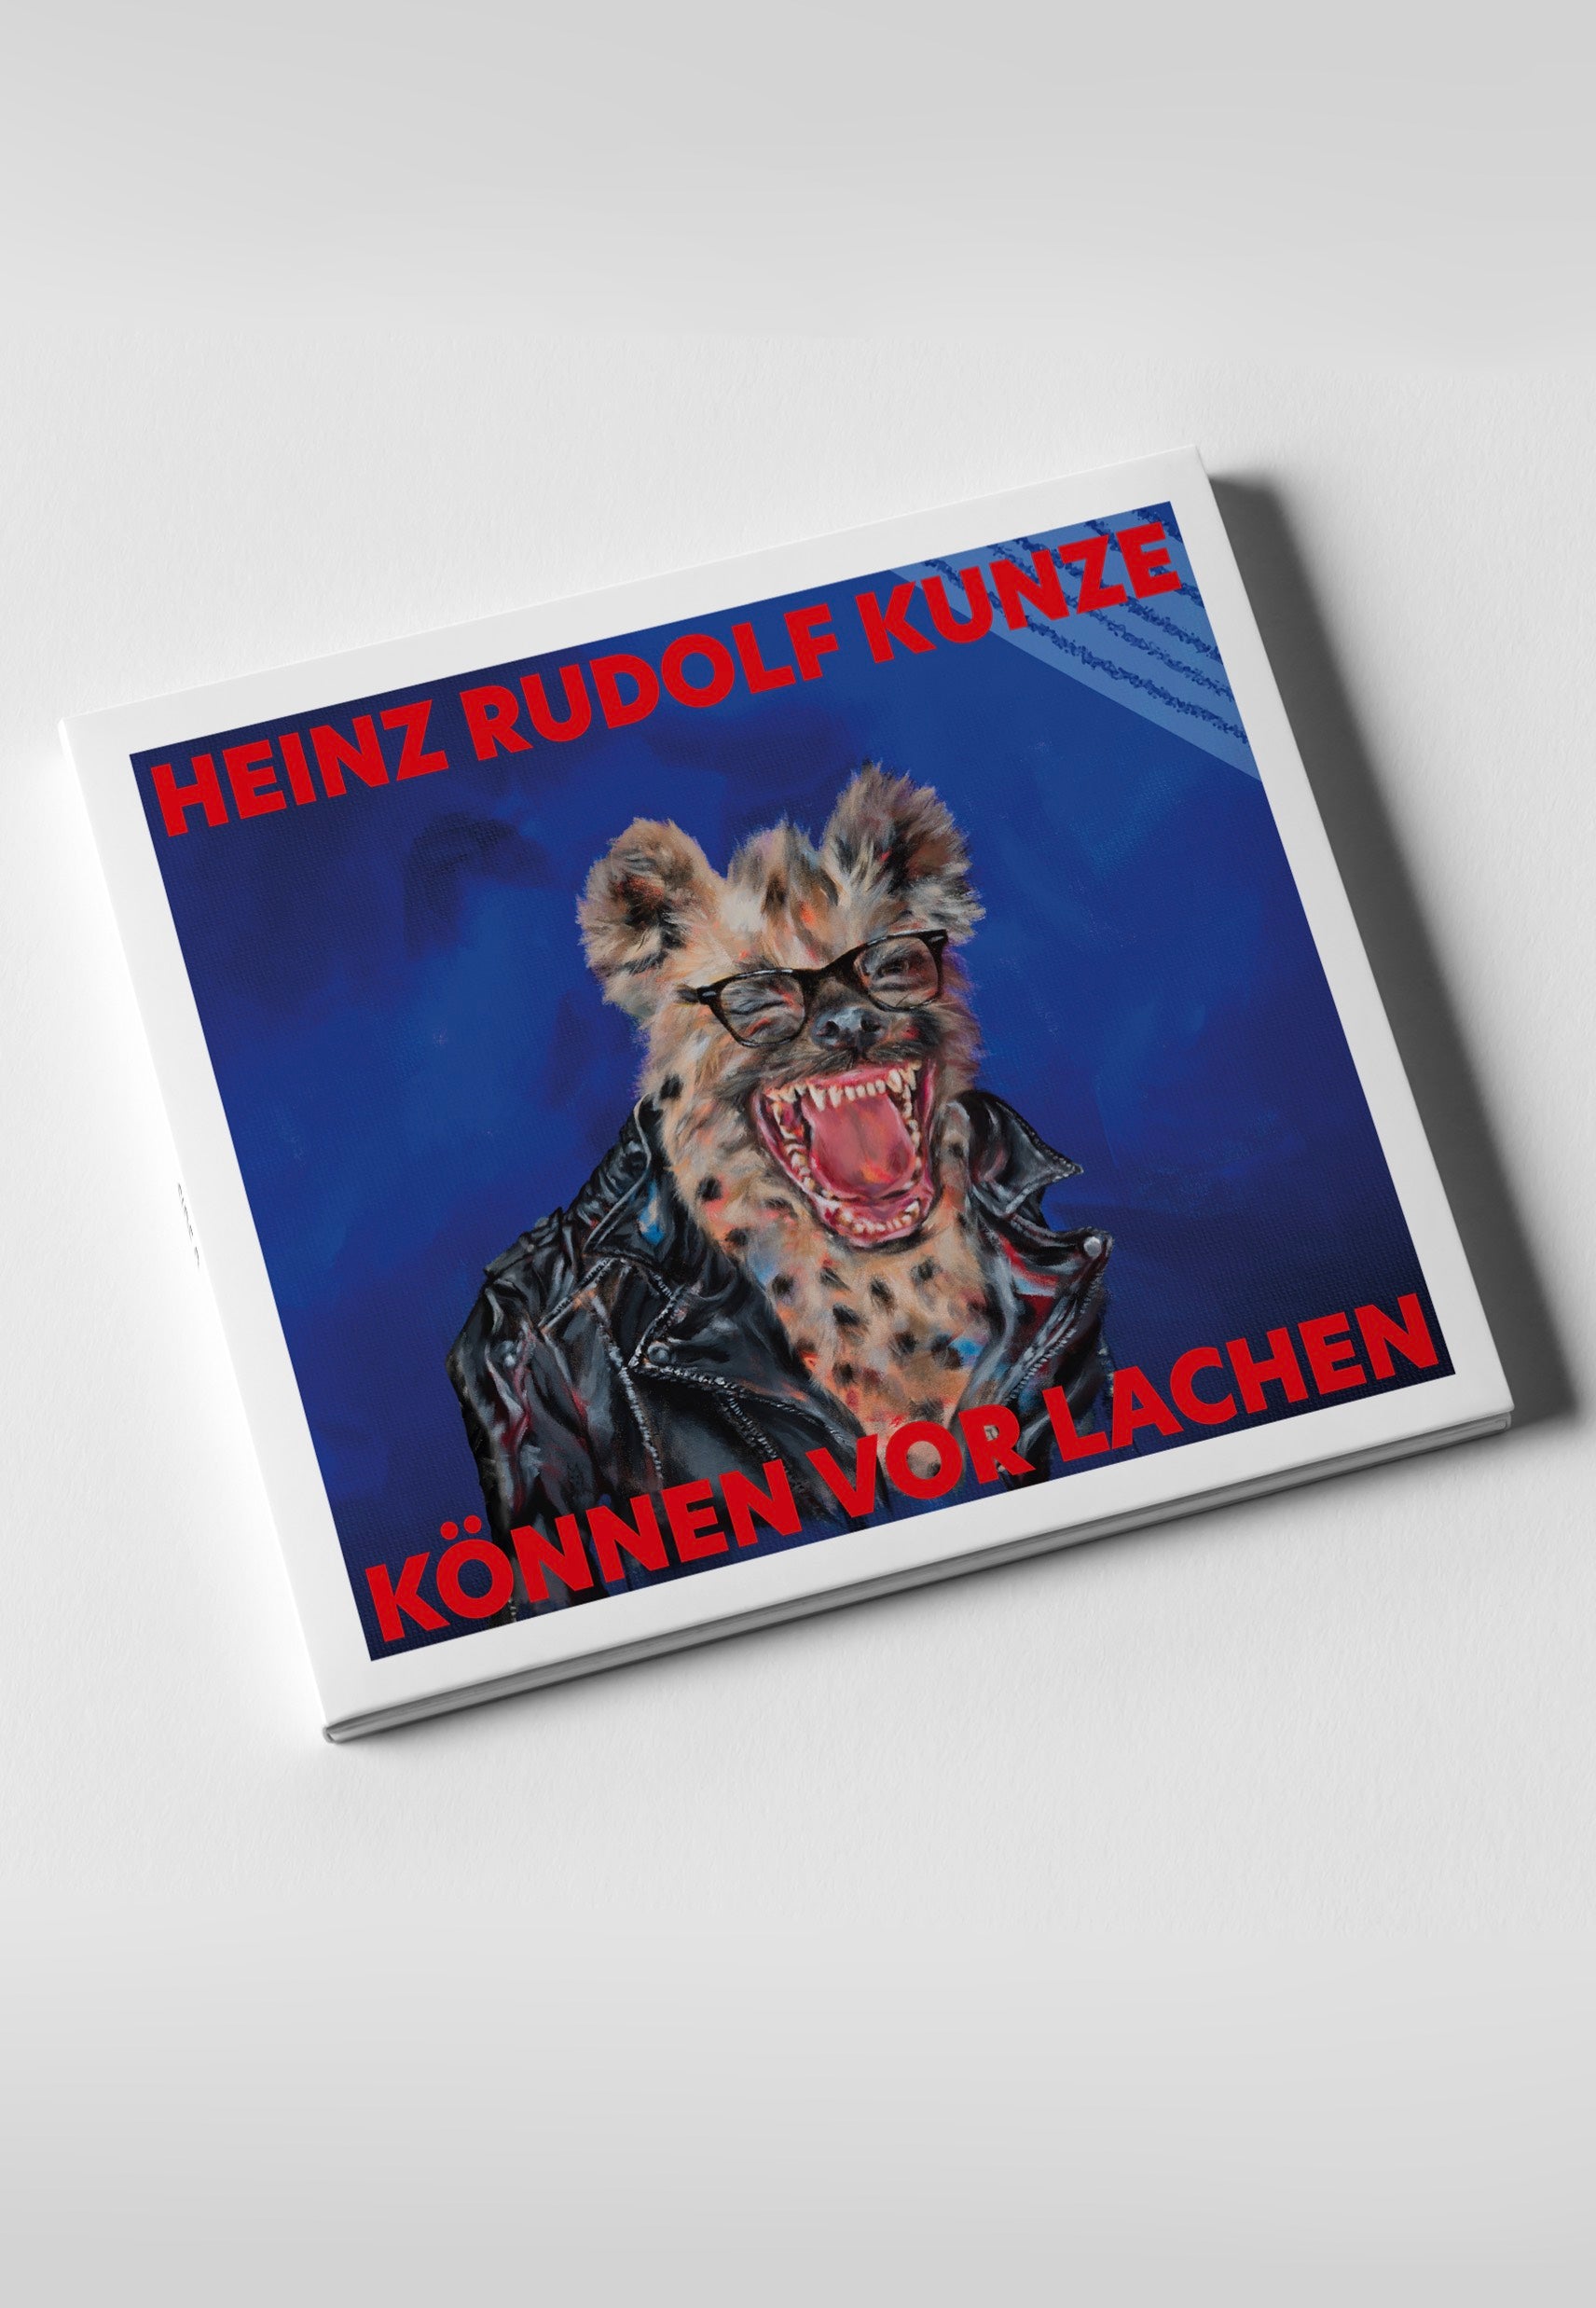 Heinz Rudolf Kunze - Können vor Lachen - Digipak CD